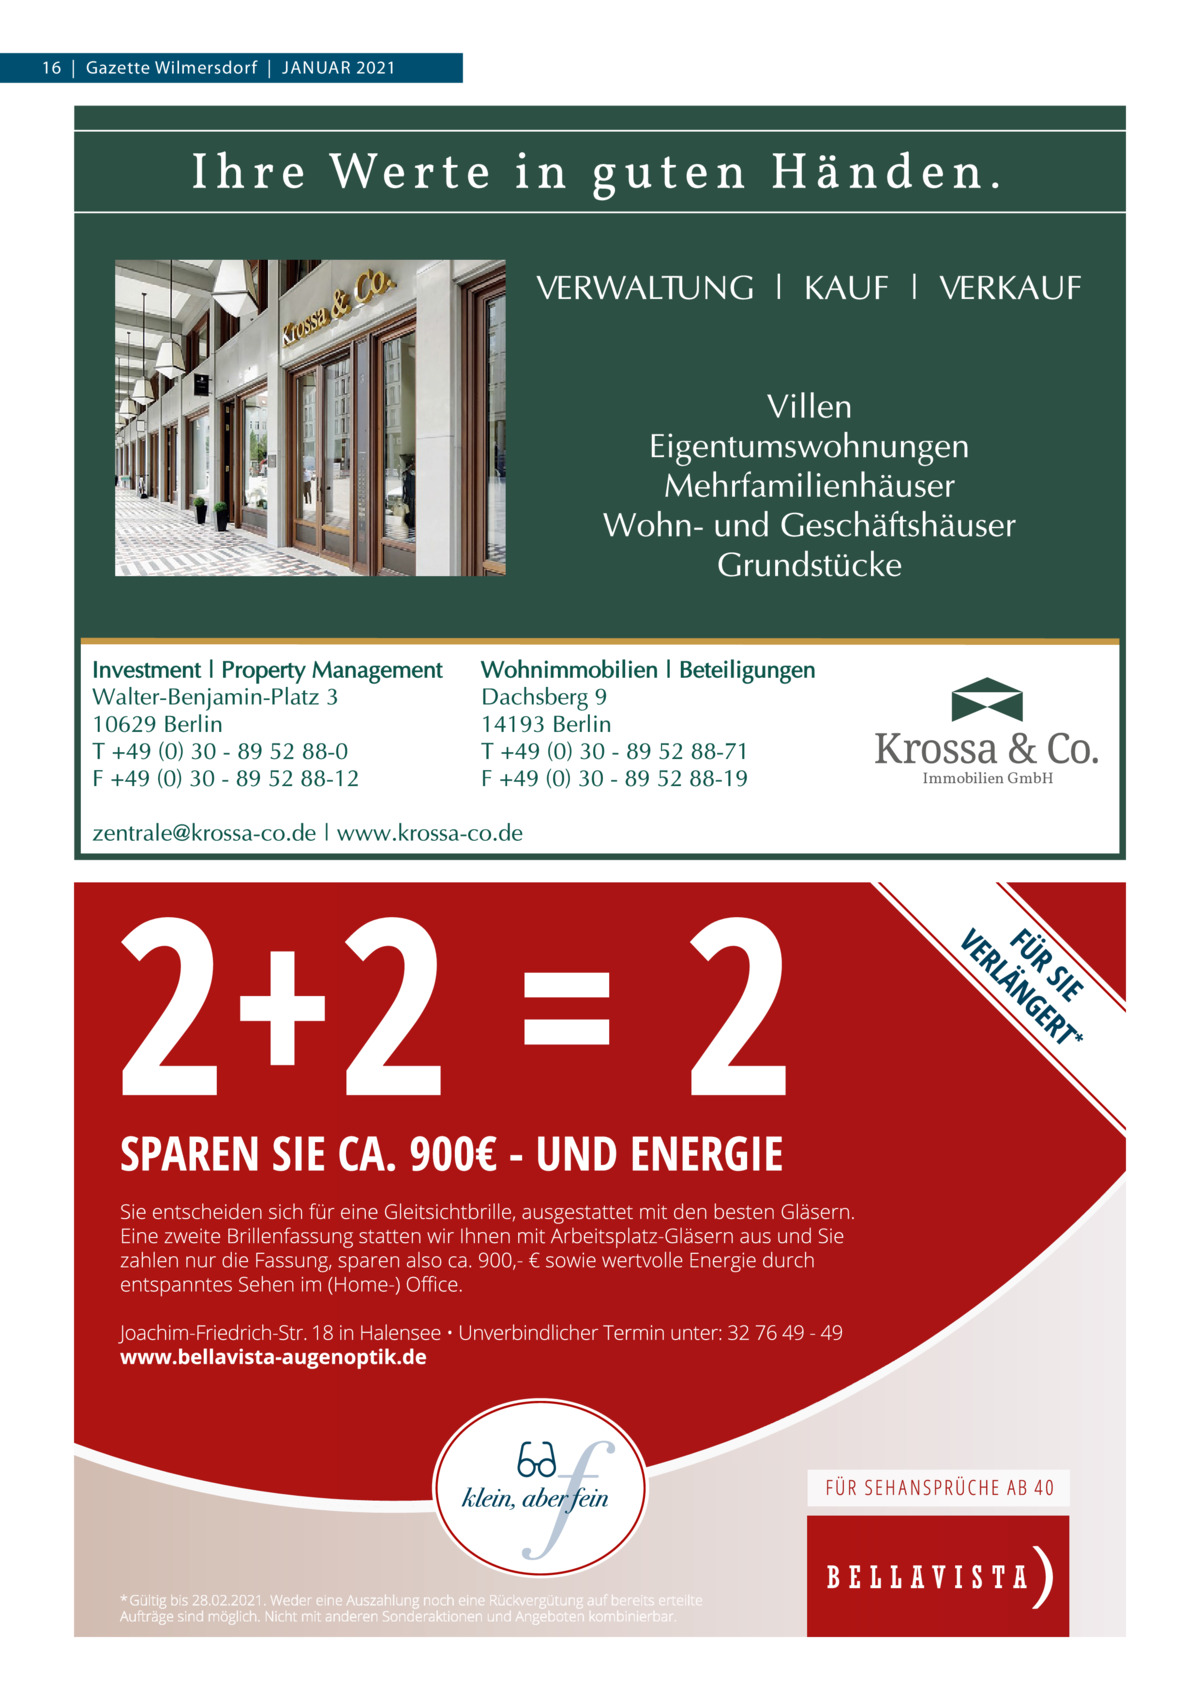 16  |  Gazette Wilmersdorf  |  Januar 2021  Immobilien GmbH